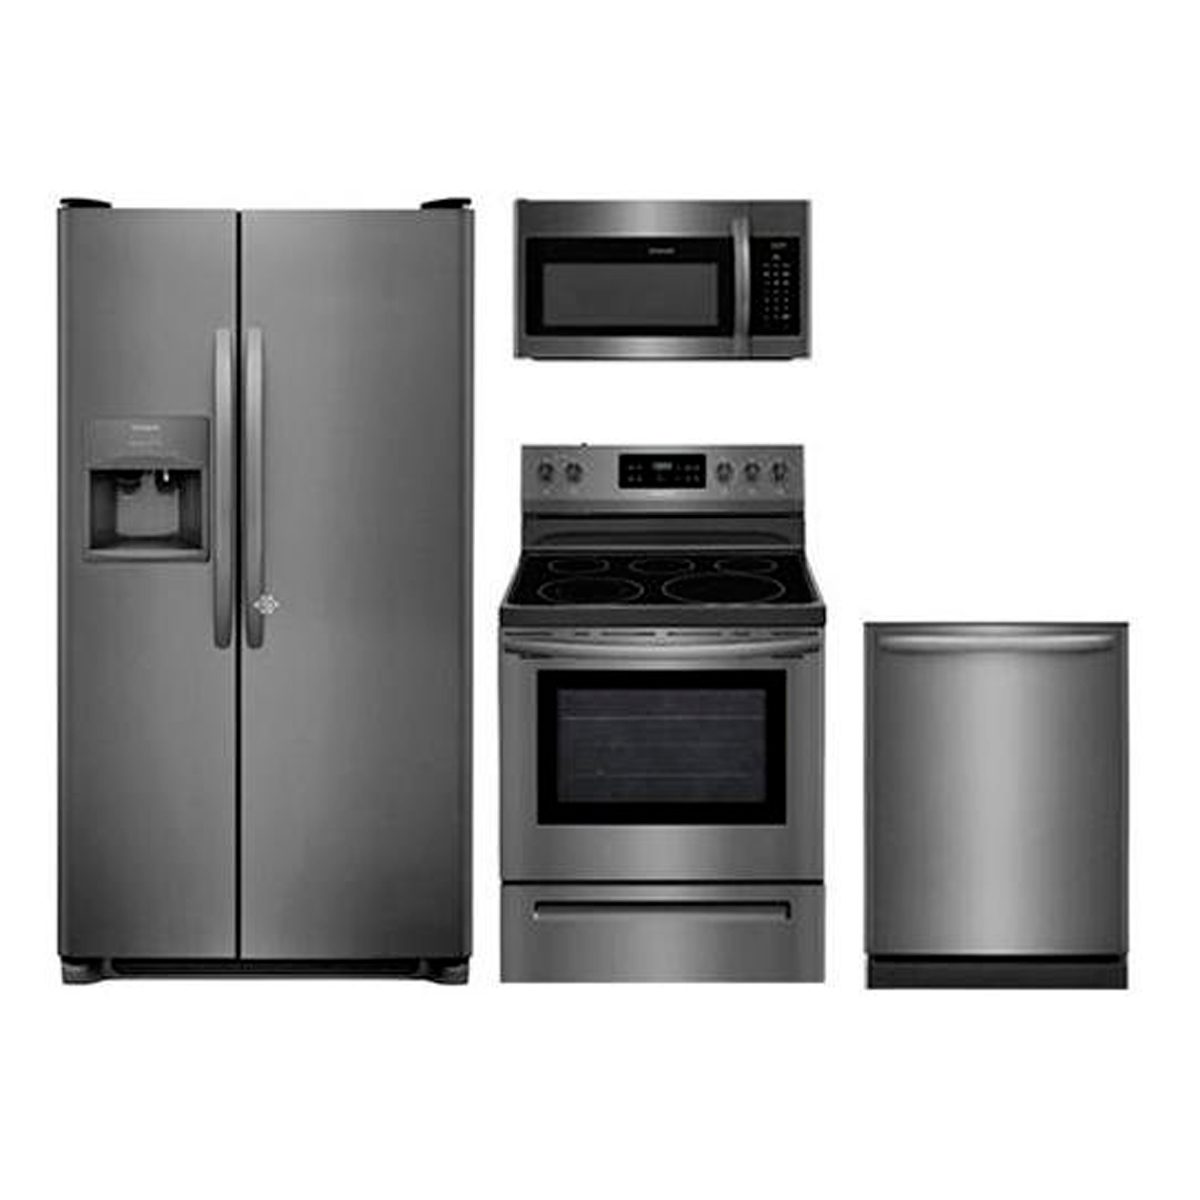 15 Stunning Black Stainless Steel Appliances | Family Handyman The Family Handyman Stainless Steel Appliance